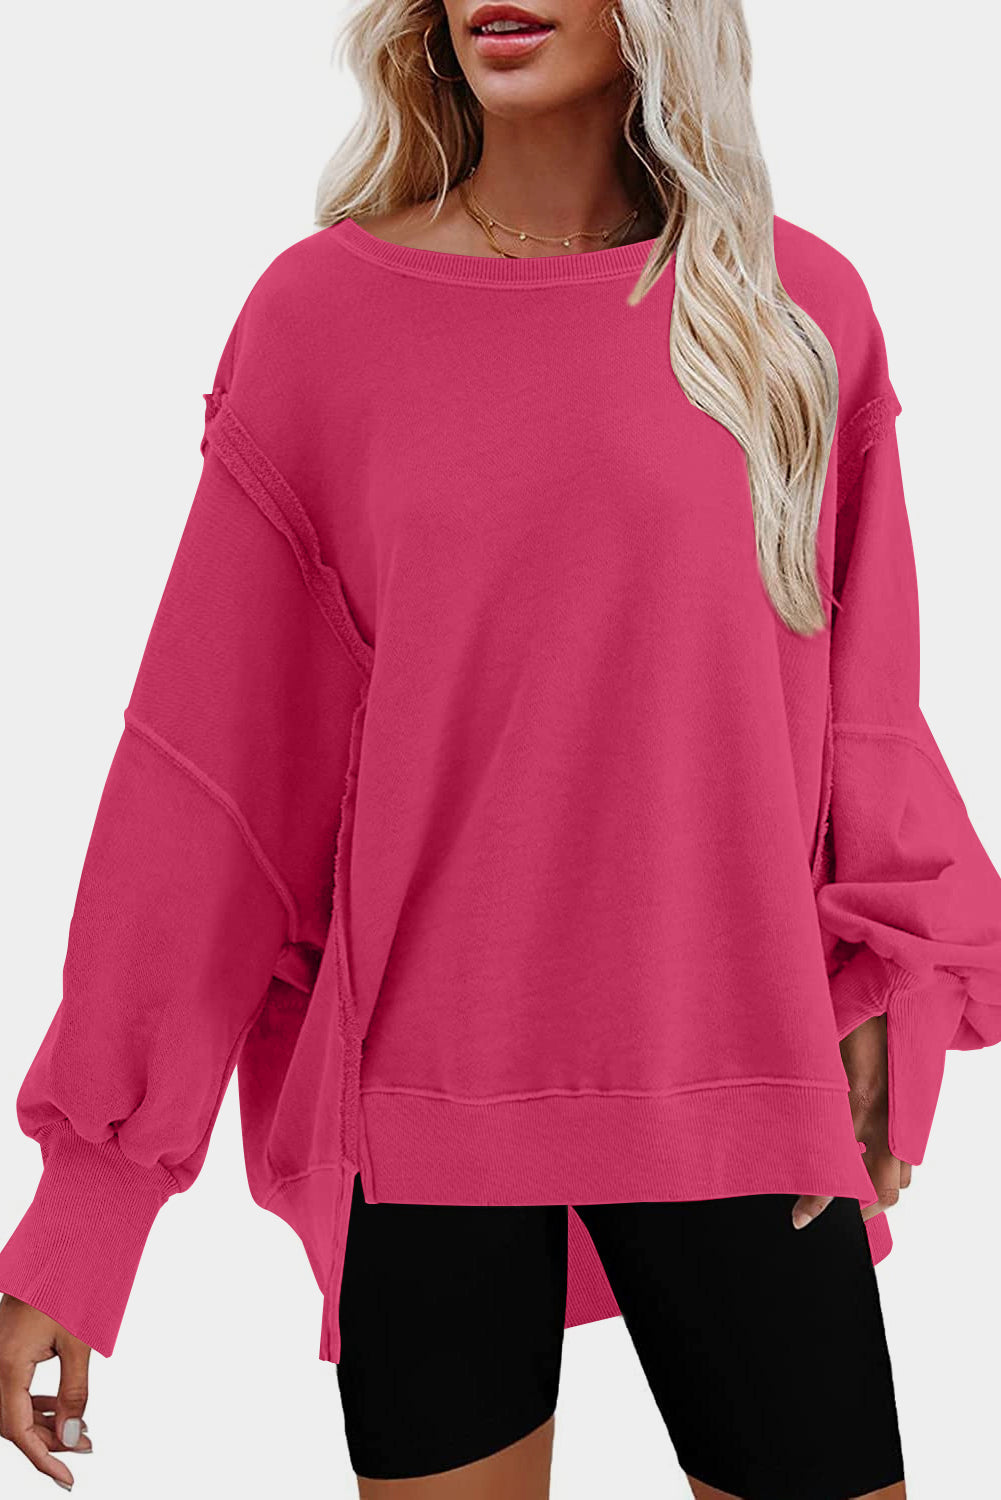 Rose exposed seam drop shoulder slit high low hem sweatshirt - 2xl / 80% cotton + 20% polyester - sweatshits & hoodies